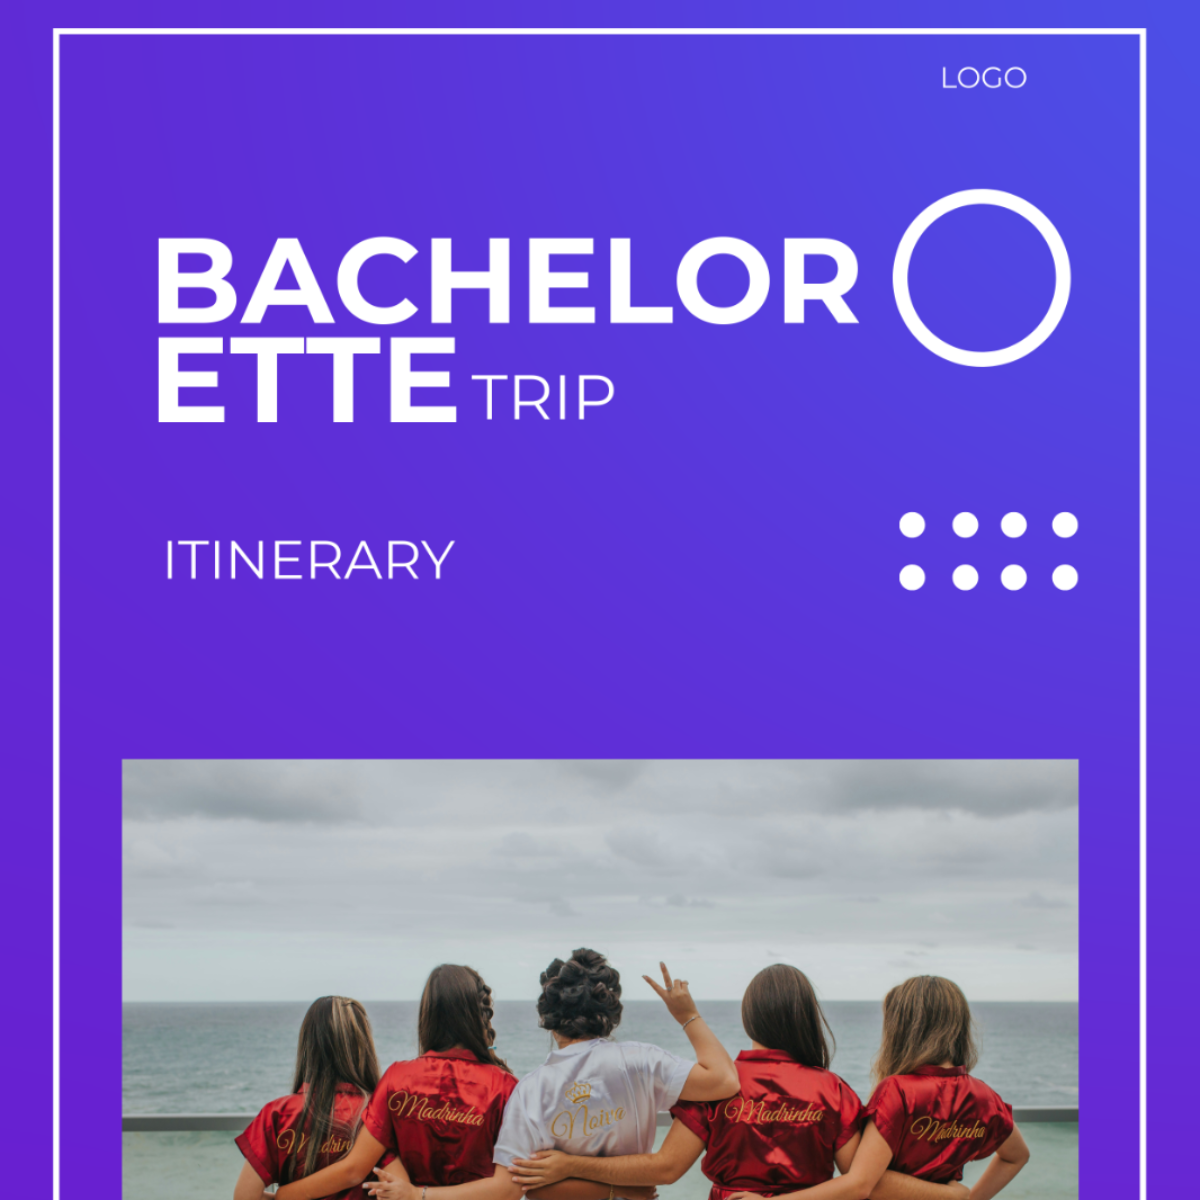 Bachelorette Trip Itinerary Template